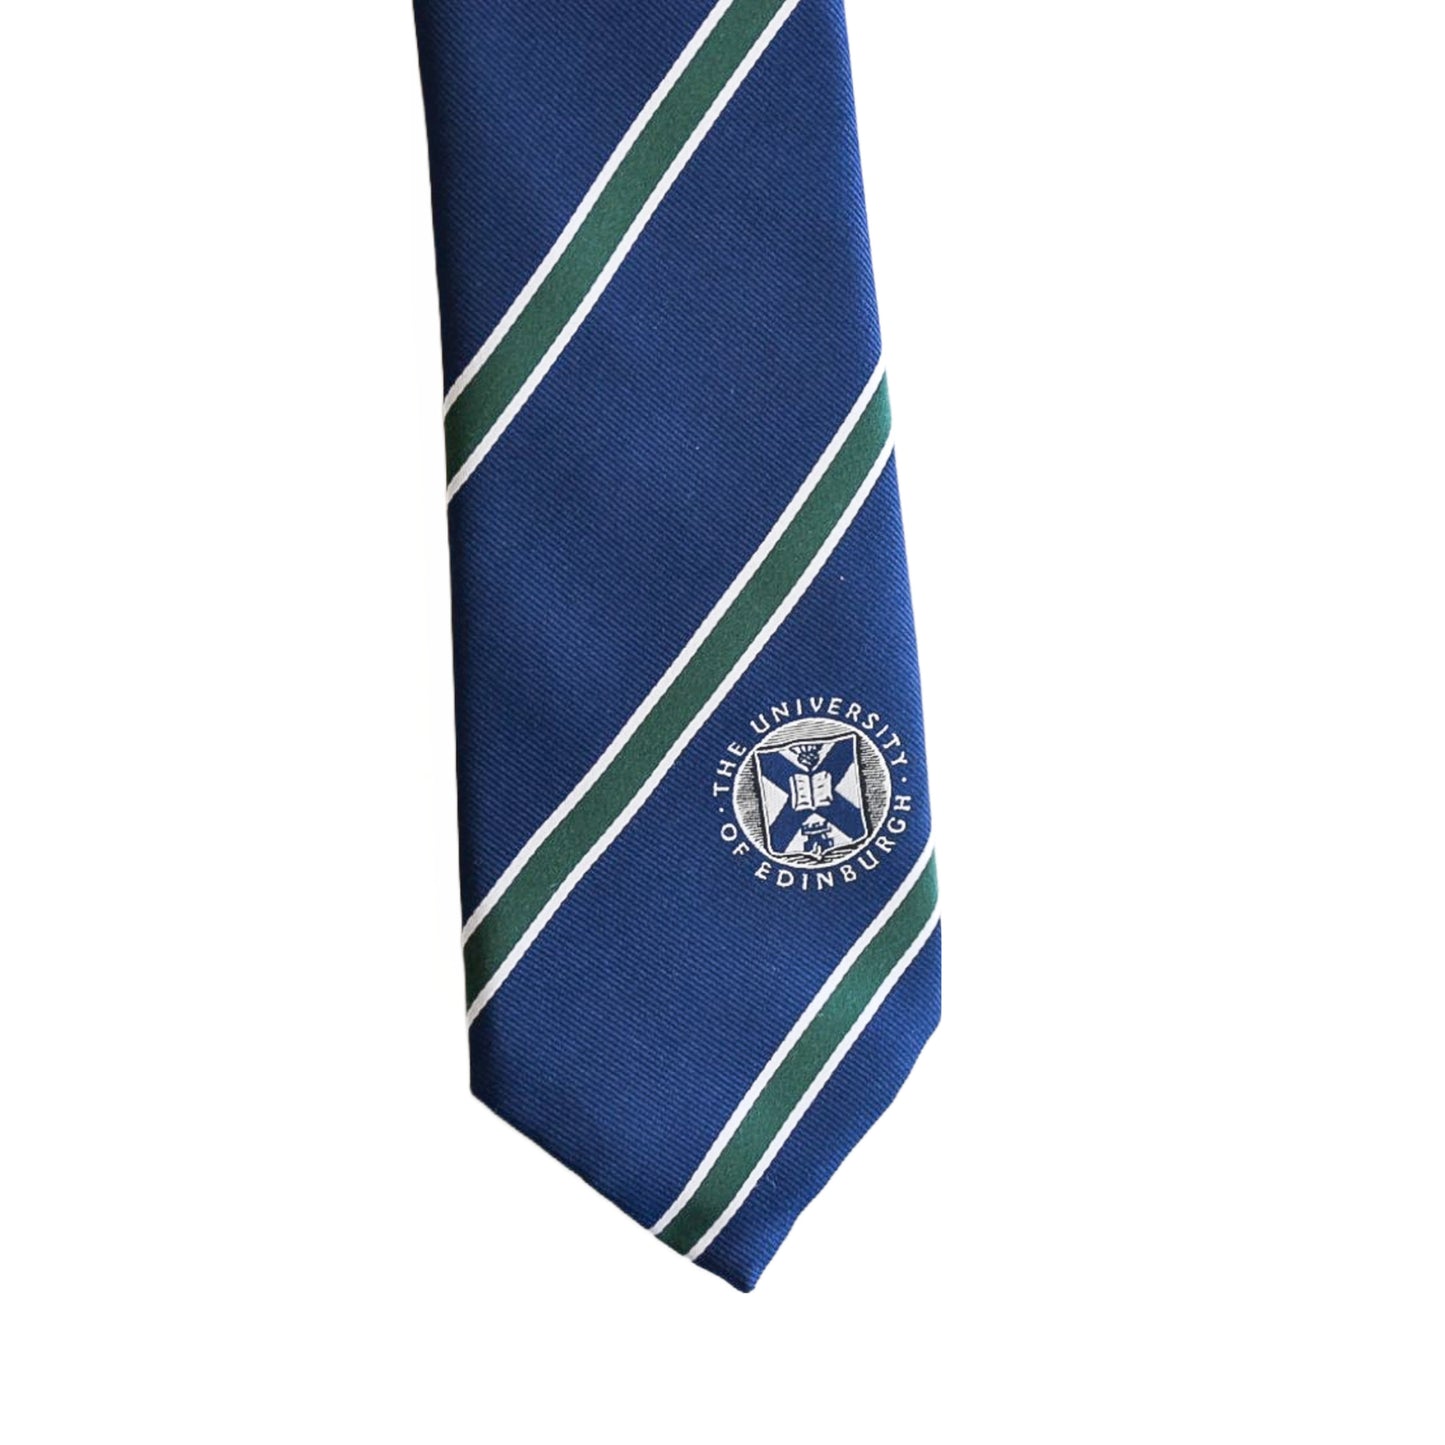 Classic Silk Tie in Navy/Green/White